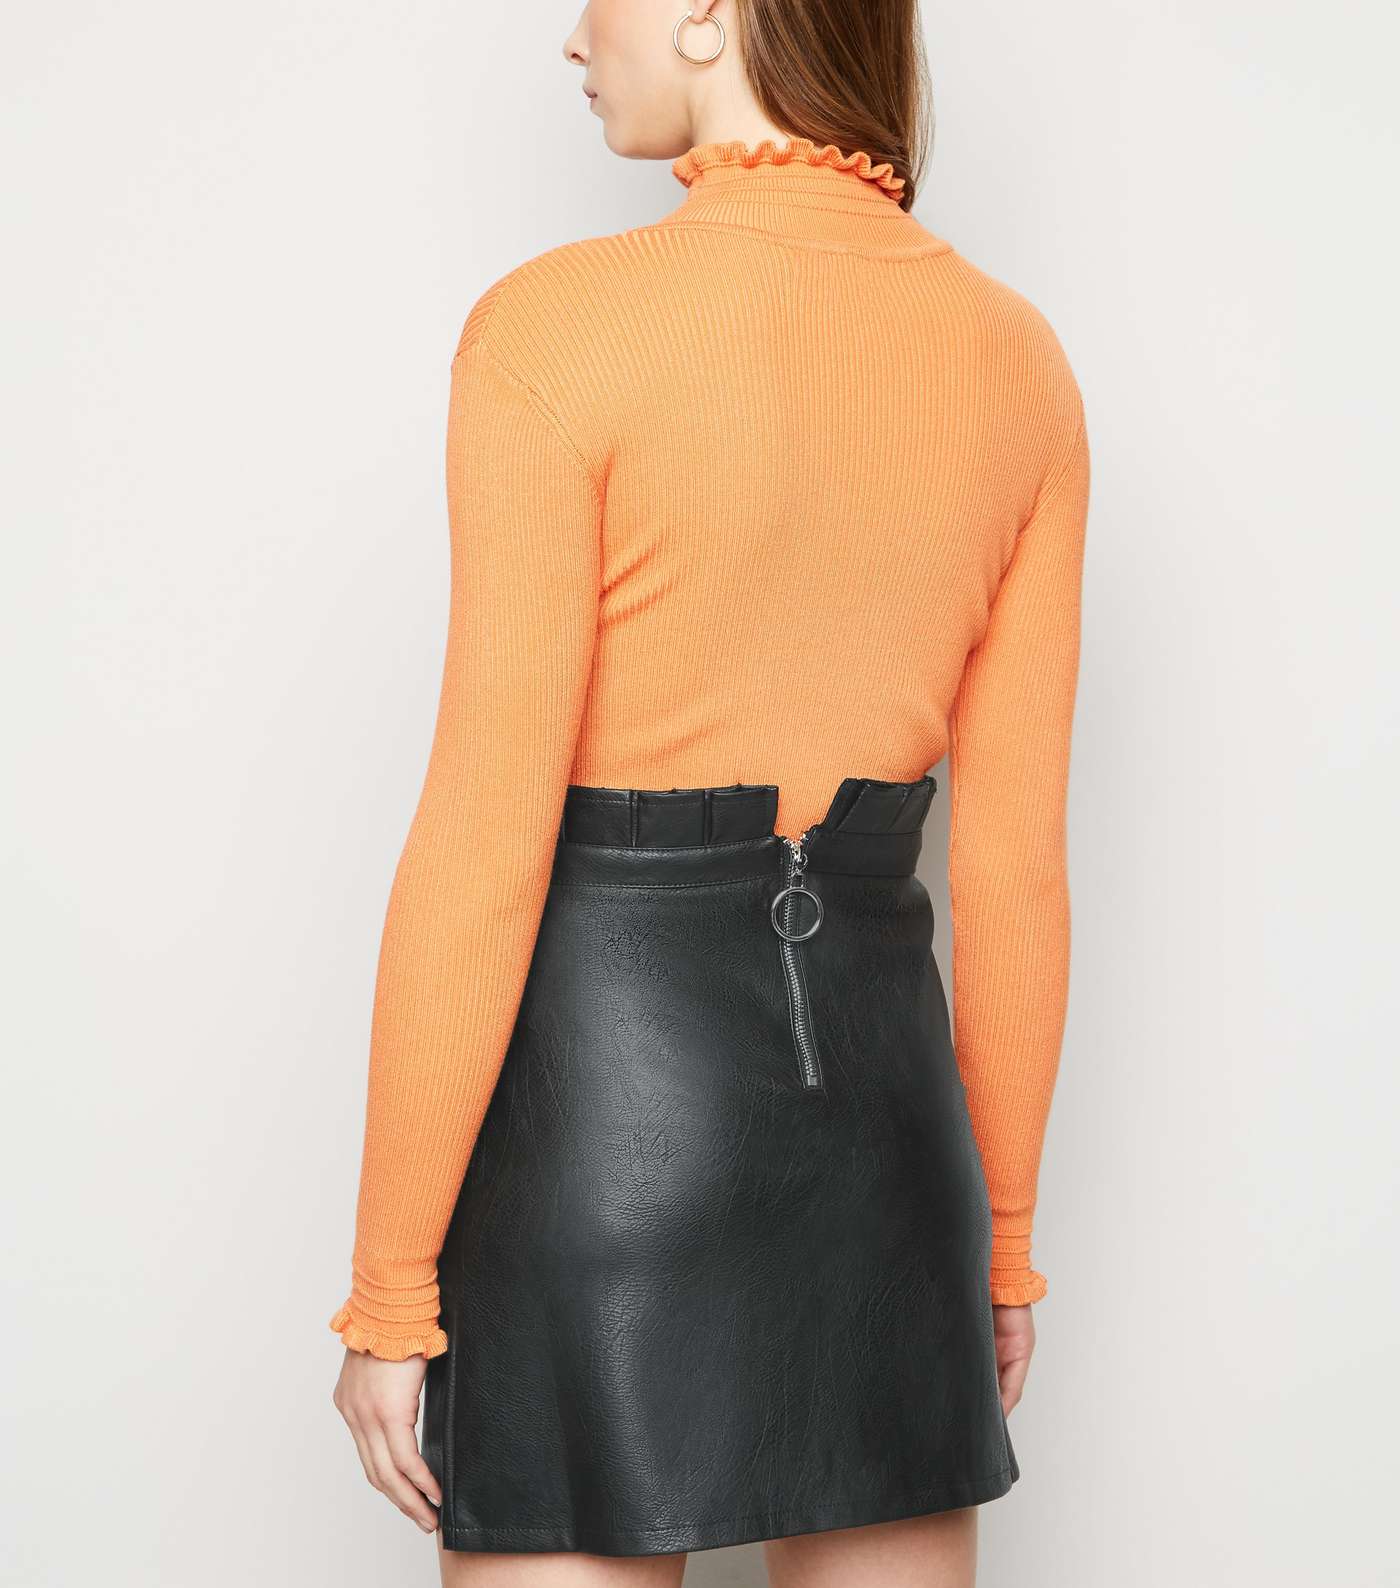 Sunshine Soul Black Leather-Look Mini Skirt Image 2